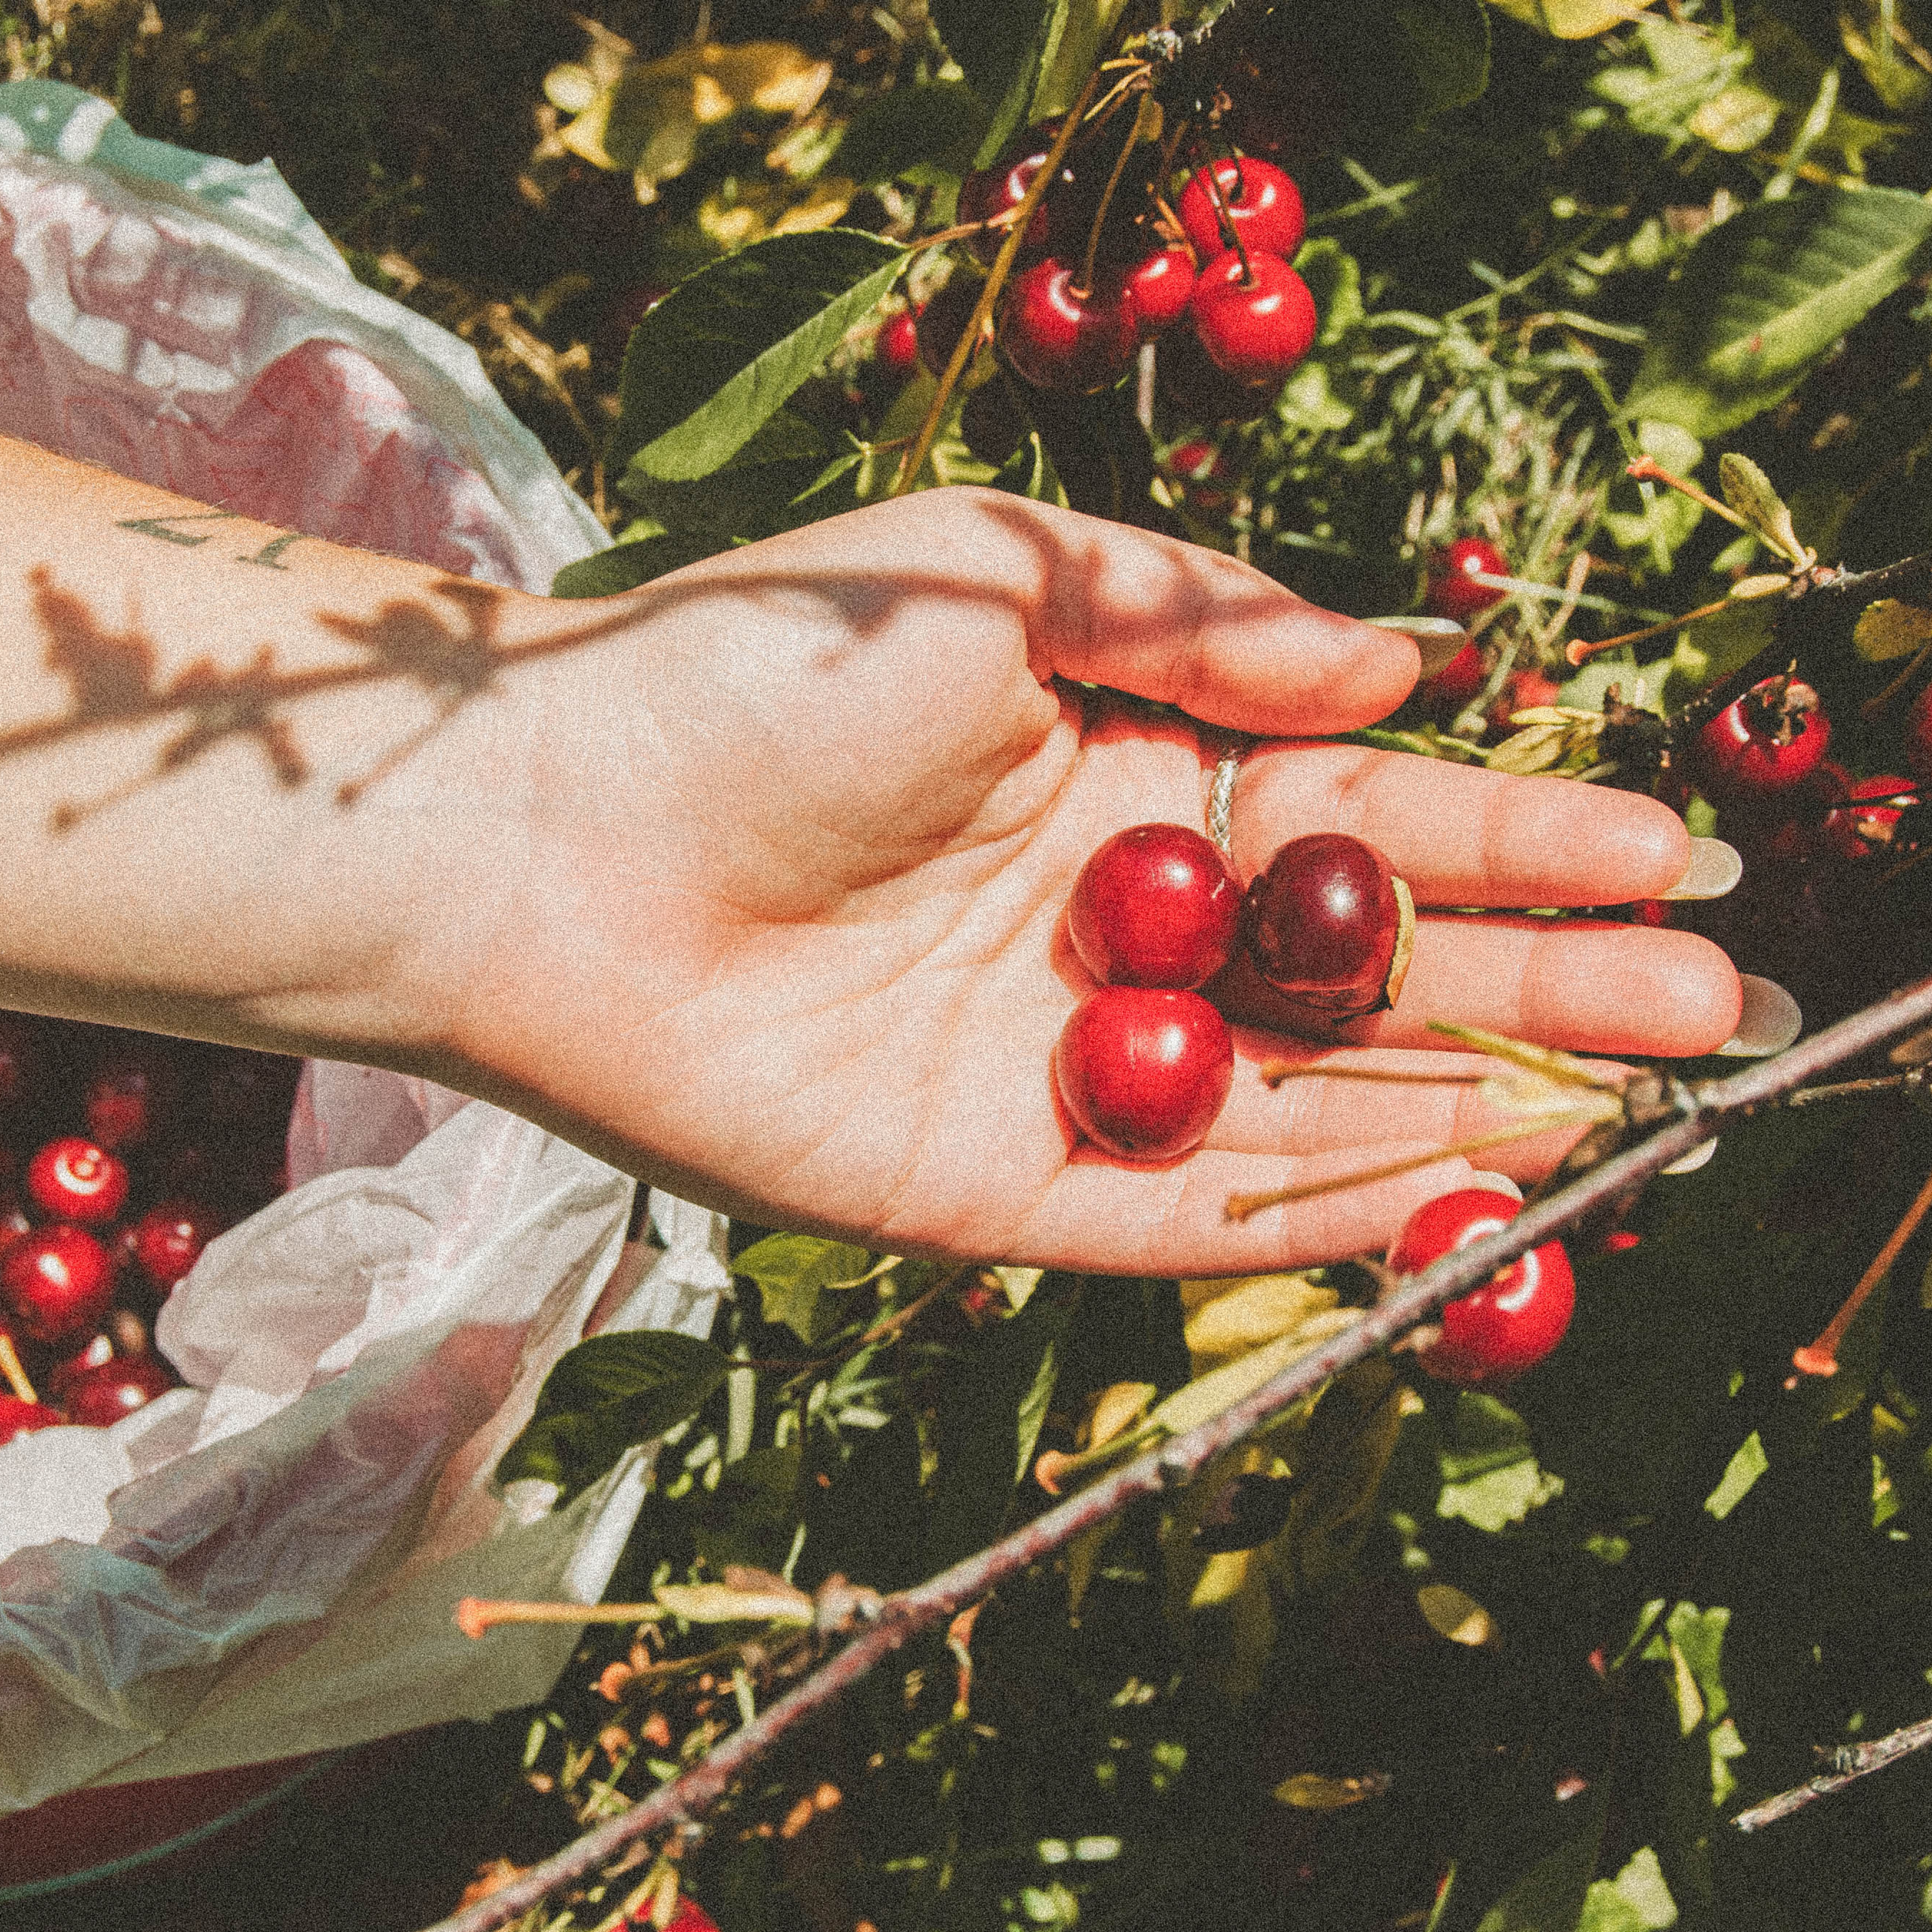 An Open Letter about our Vanilla Bean Granola & Sour Cherries